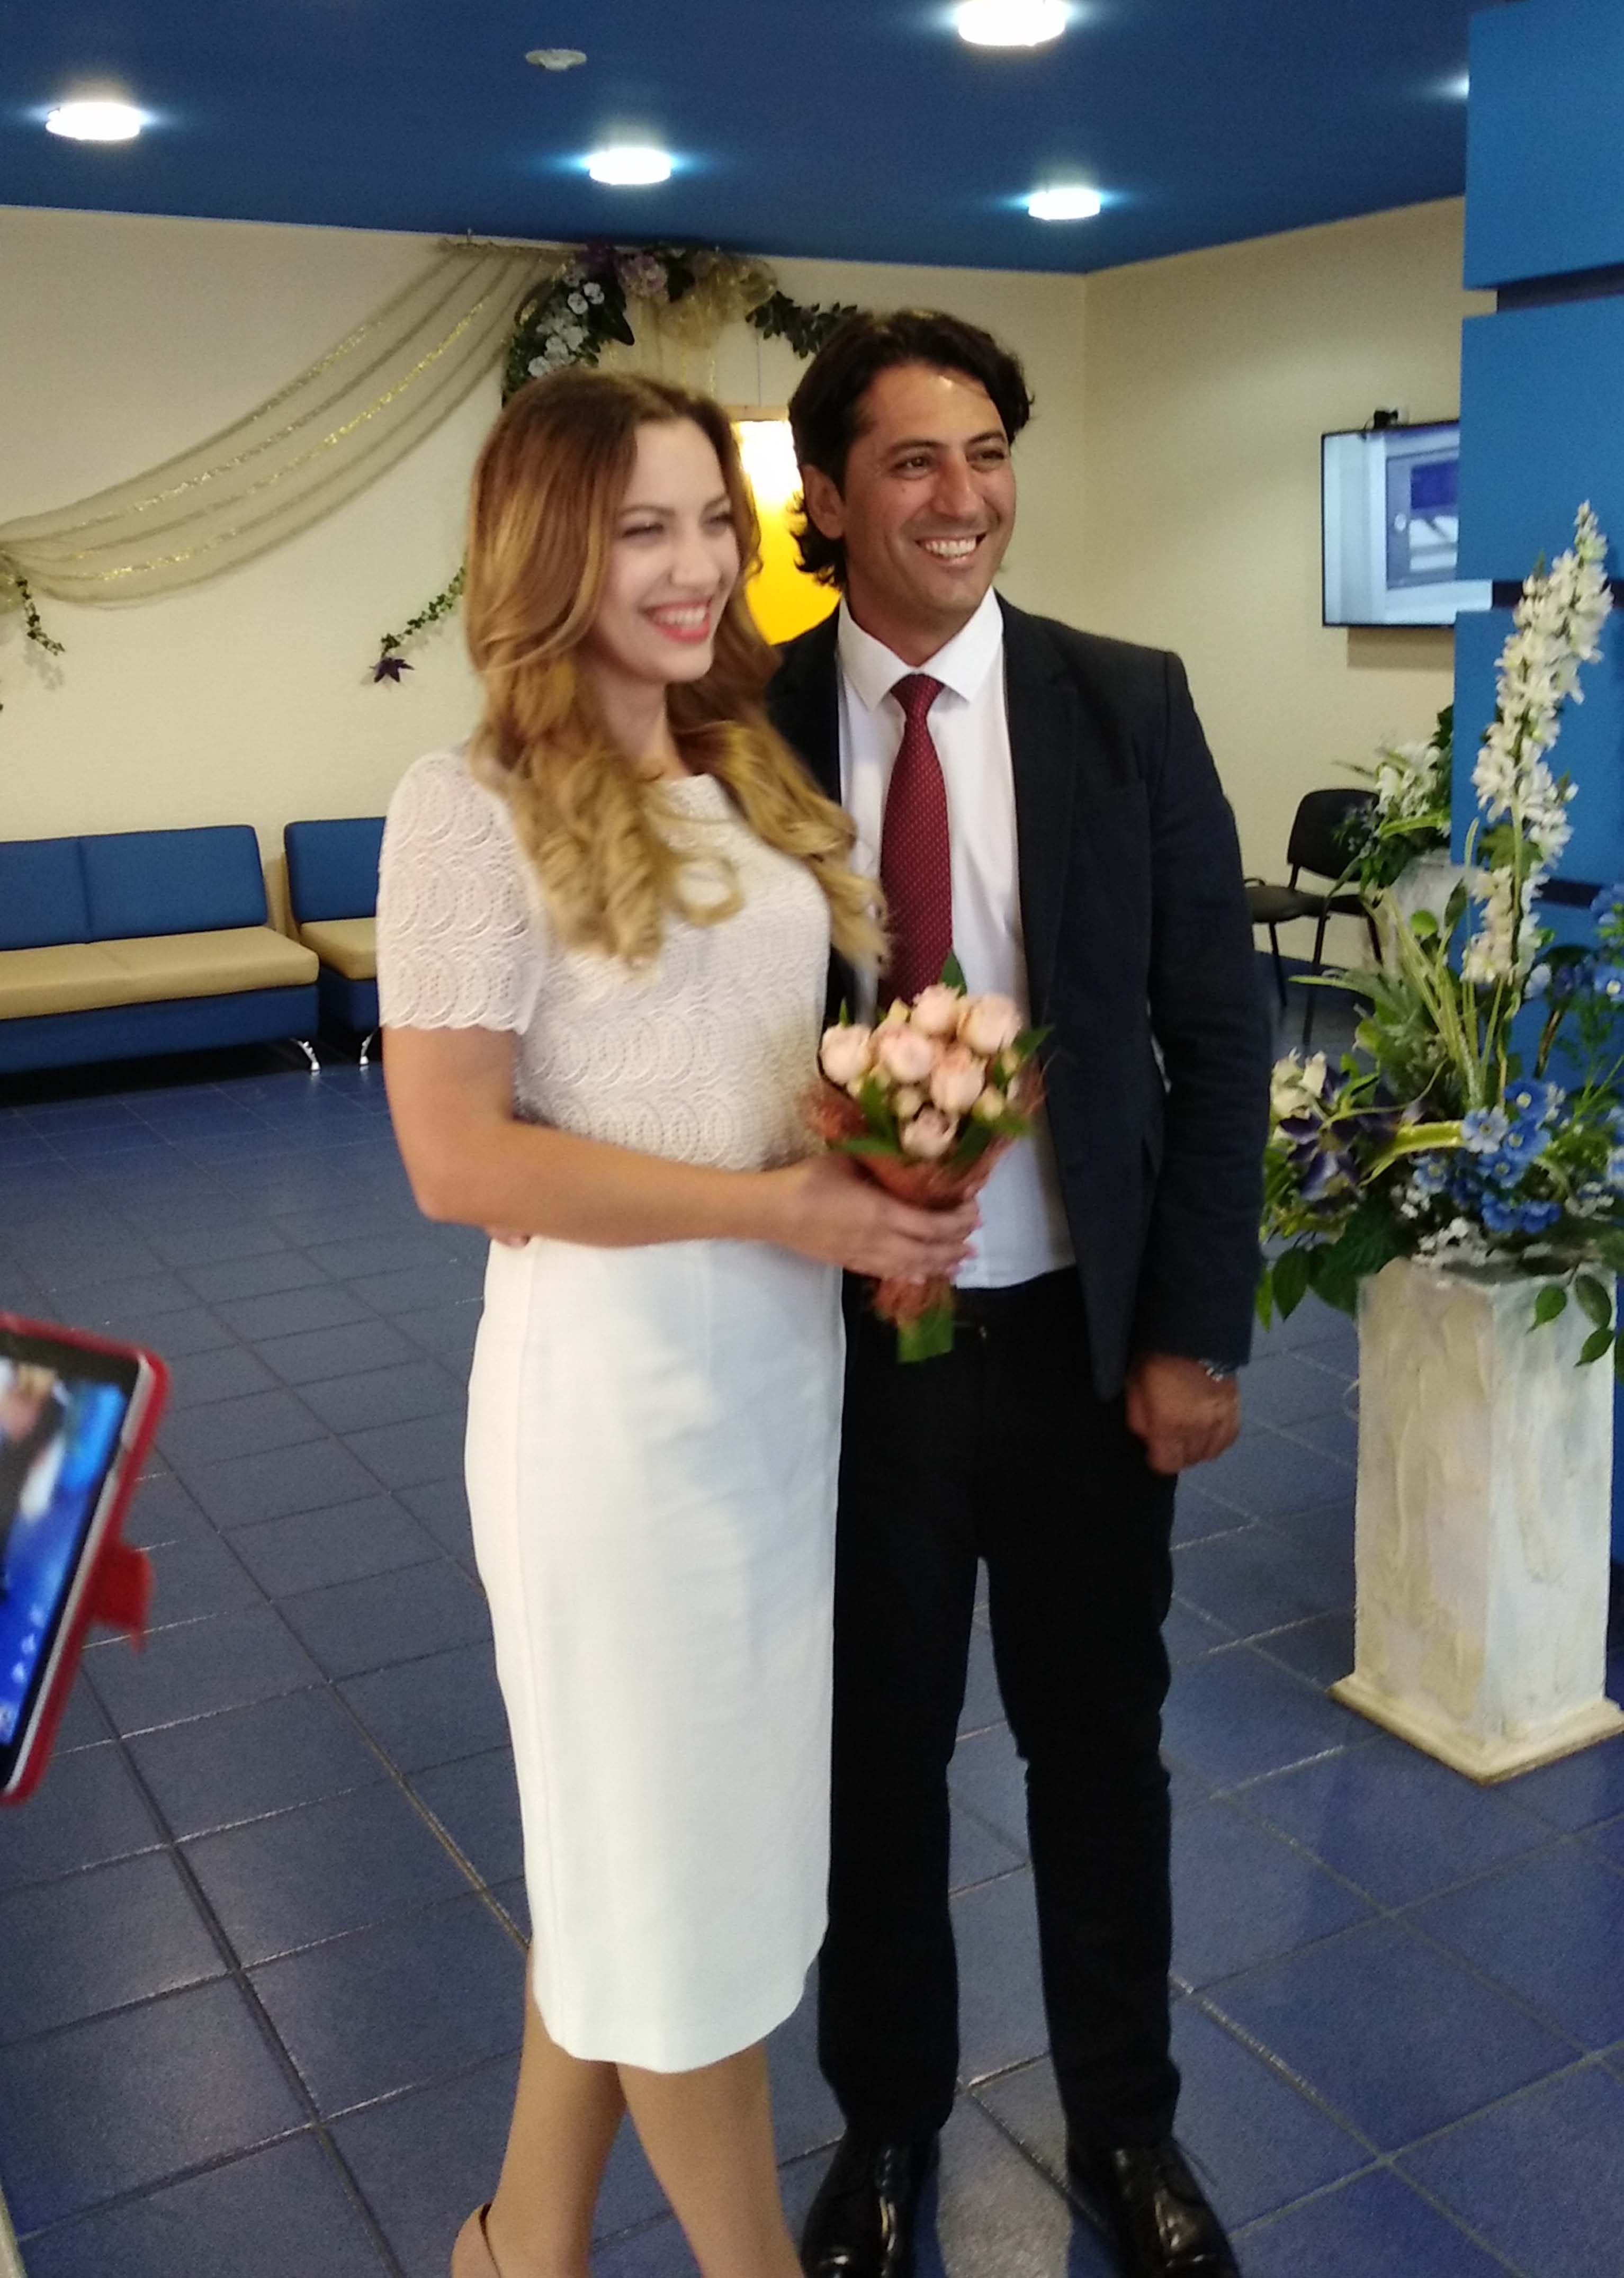 Happy newlyweds - Translation of weddings, celebrations, registrations